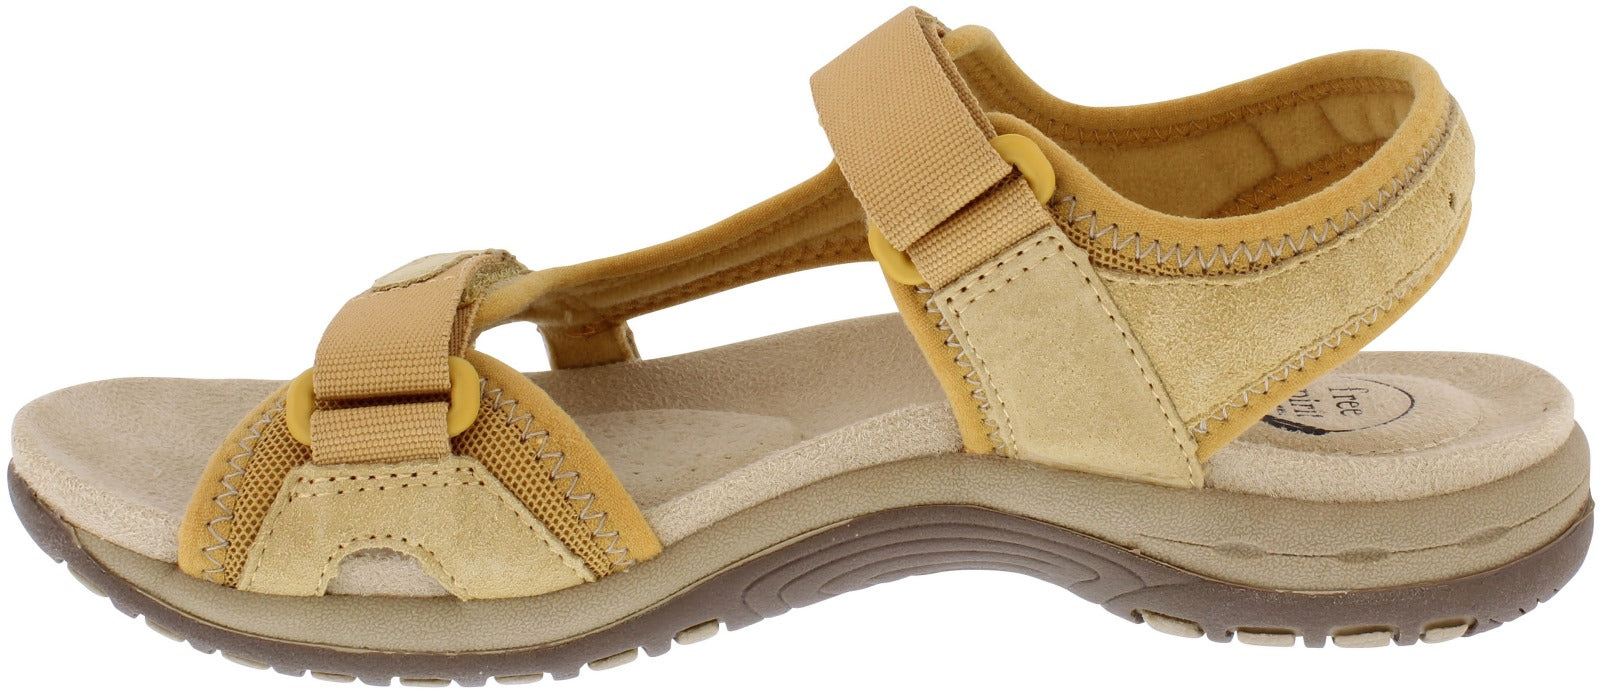 Free Spirit Frisco Ladies Dijon Yellow Suede & Textile Touch Fastening Sandals